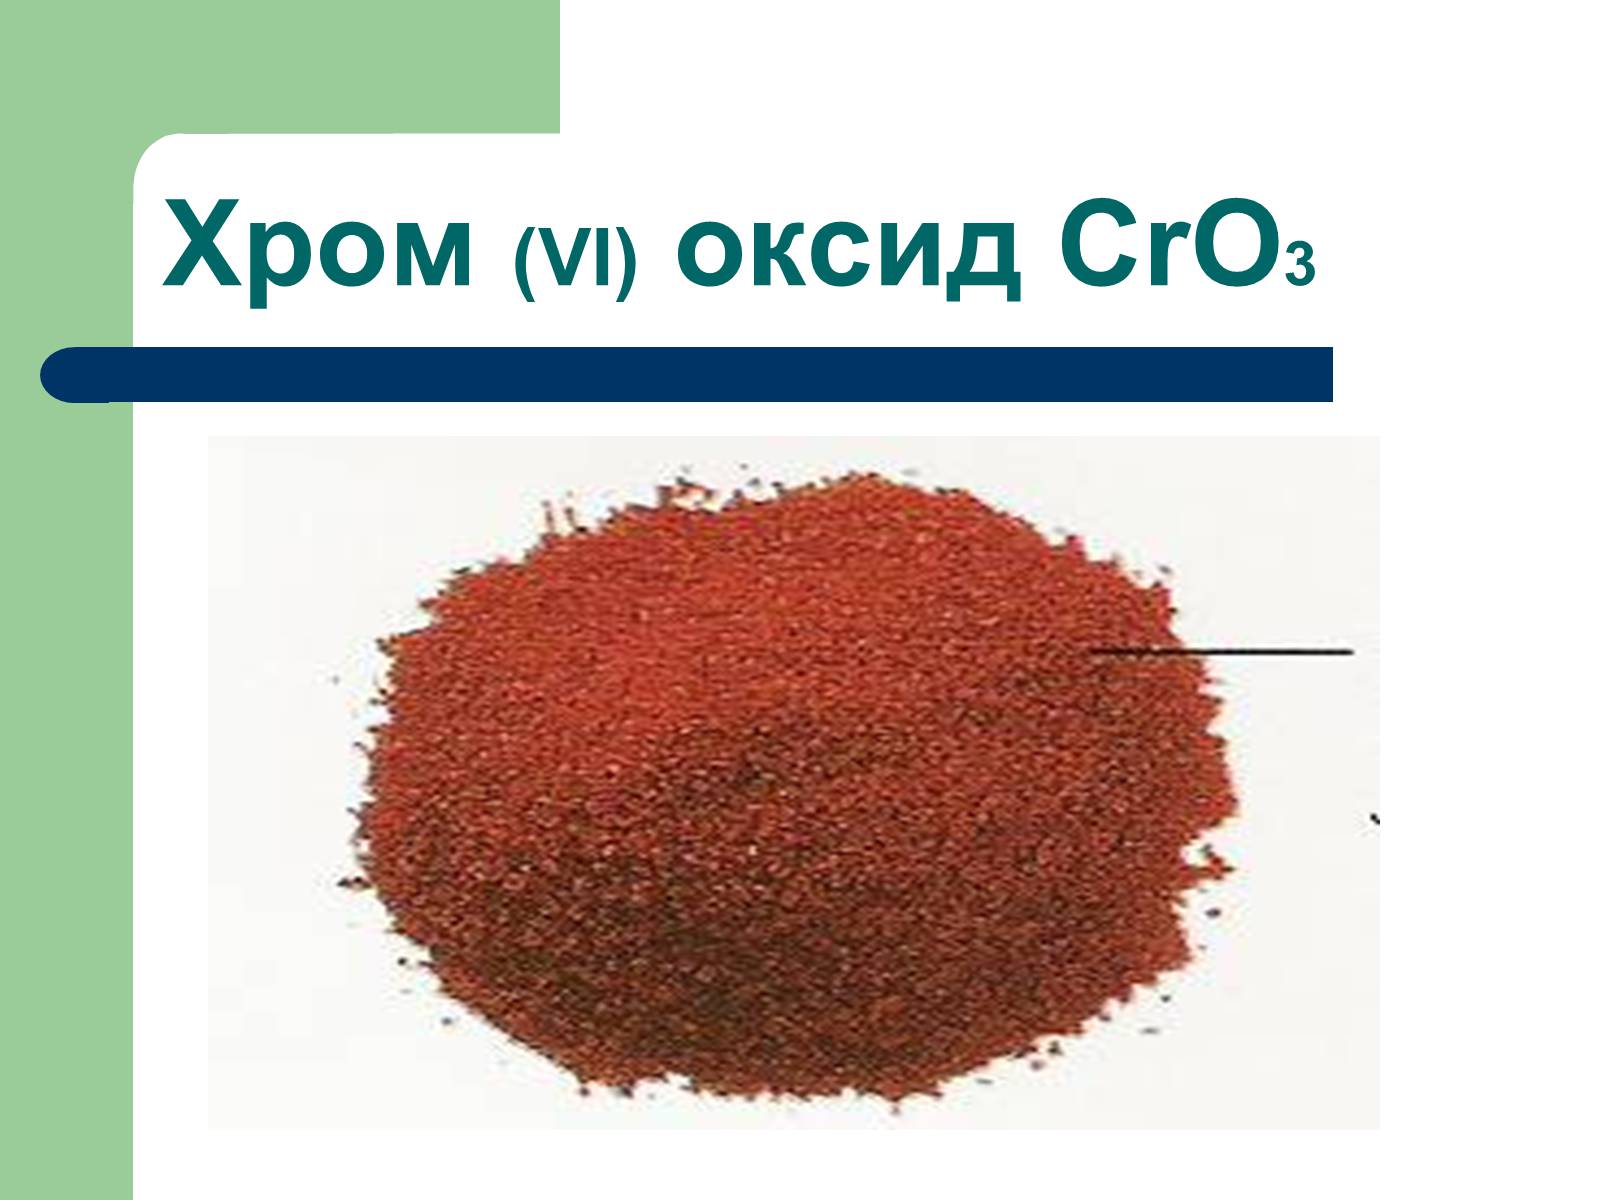 Оксид хрома 6 формула кислоты. Оксид хрома cro3. Оксид хрома 2. Оксид хрома 2 цвет. Оксид хрома цвет.